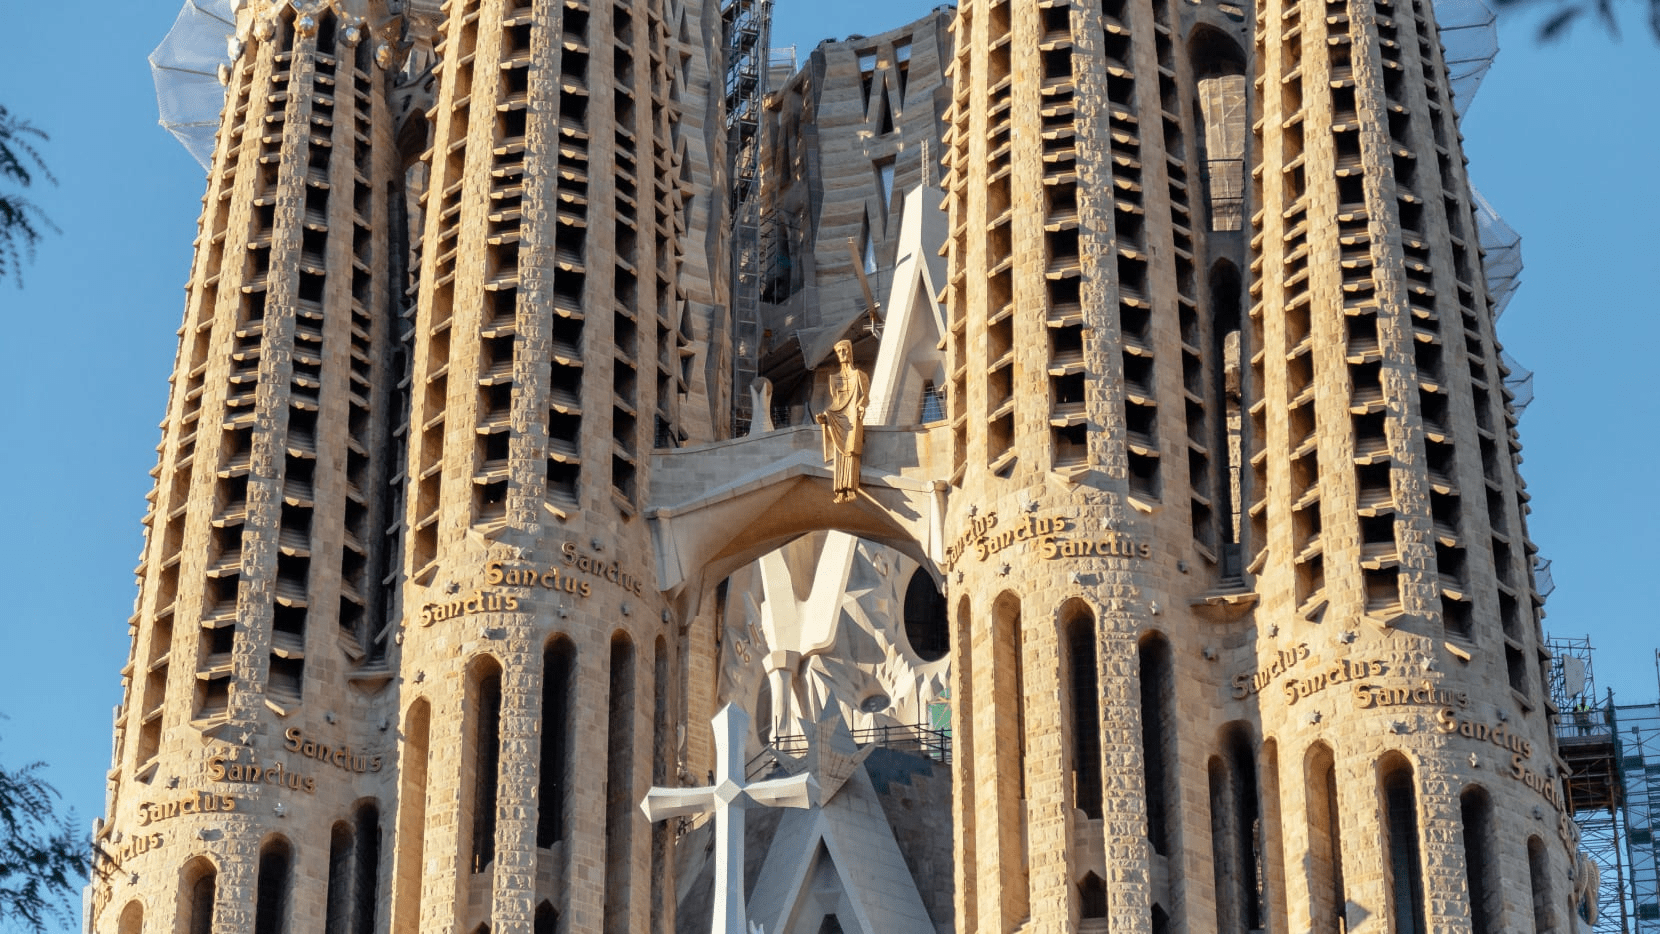 Sagrada Familia by Gaudi - Basilica in Barcelona, Spain - 137 Year Project 104